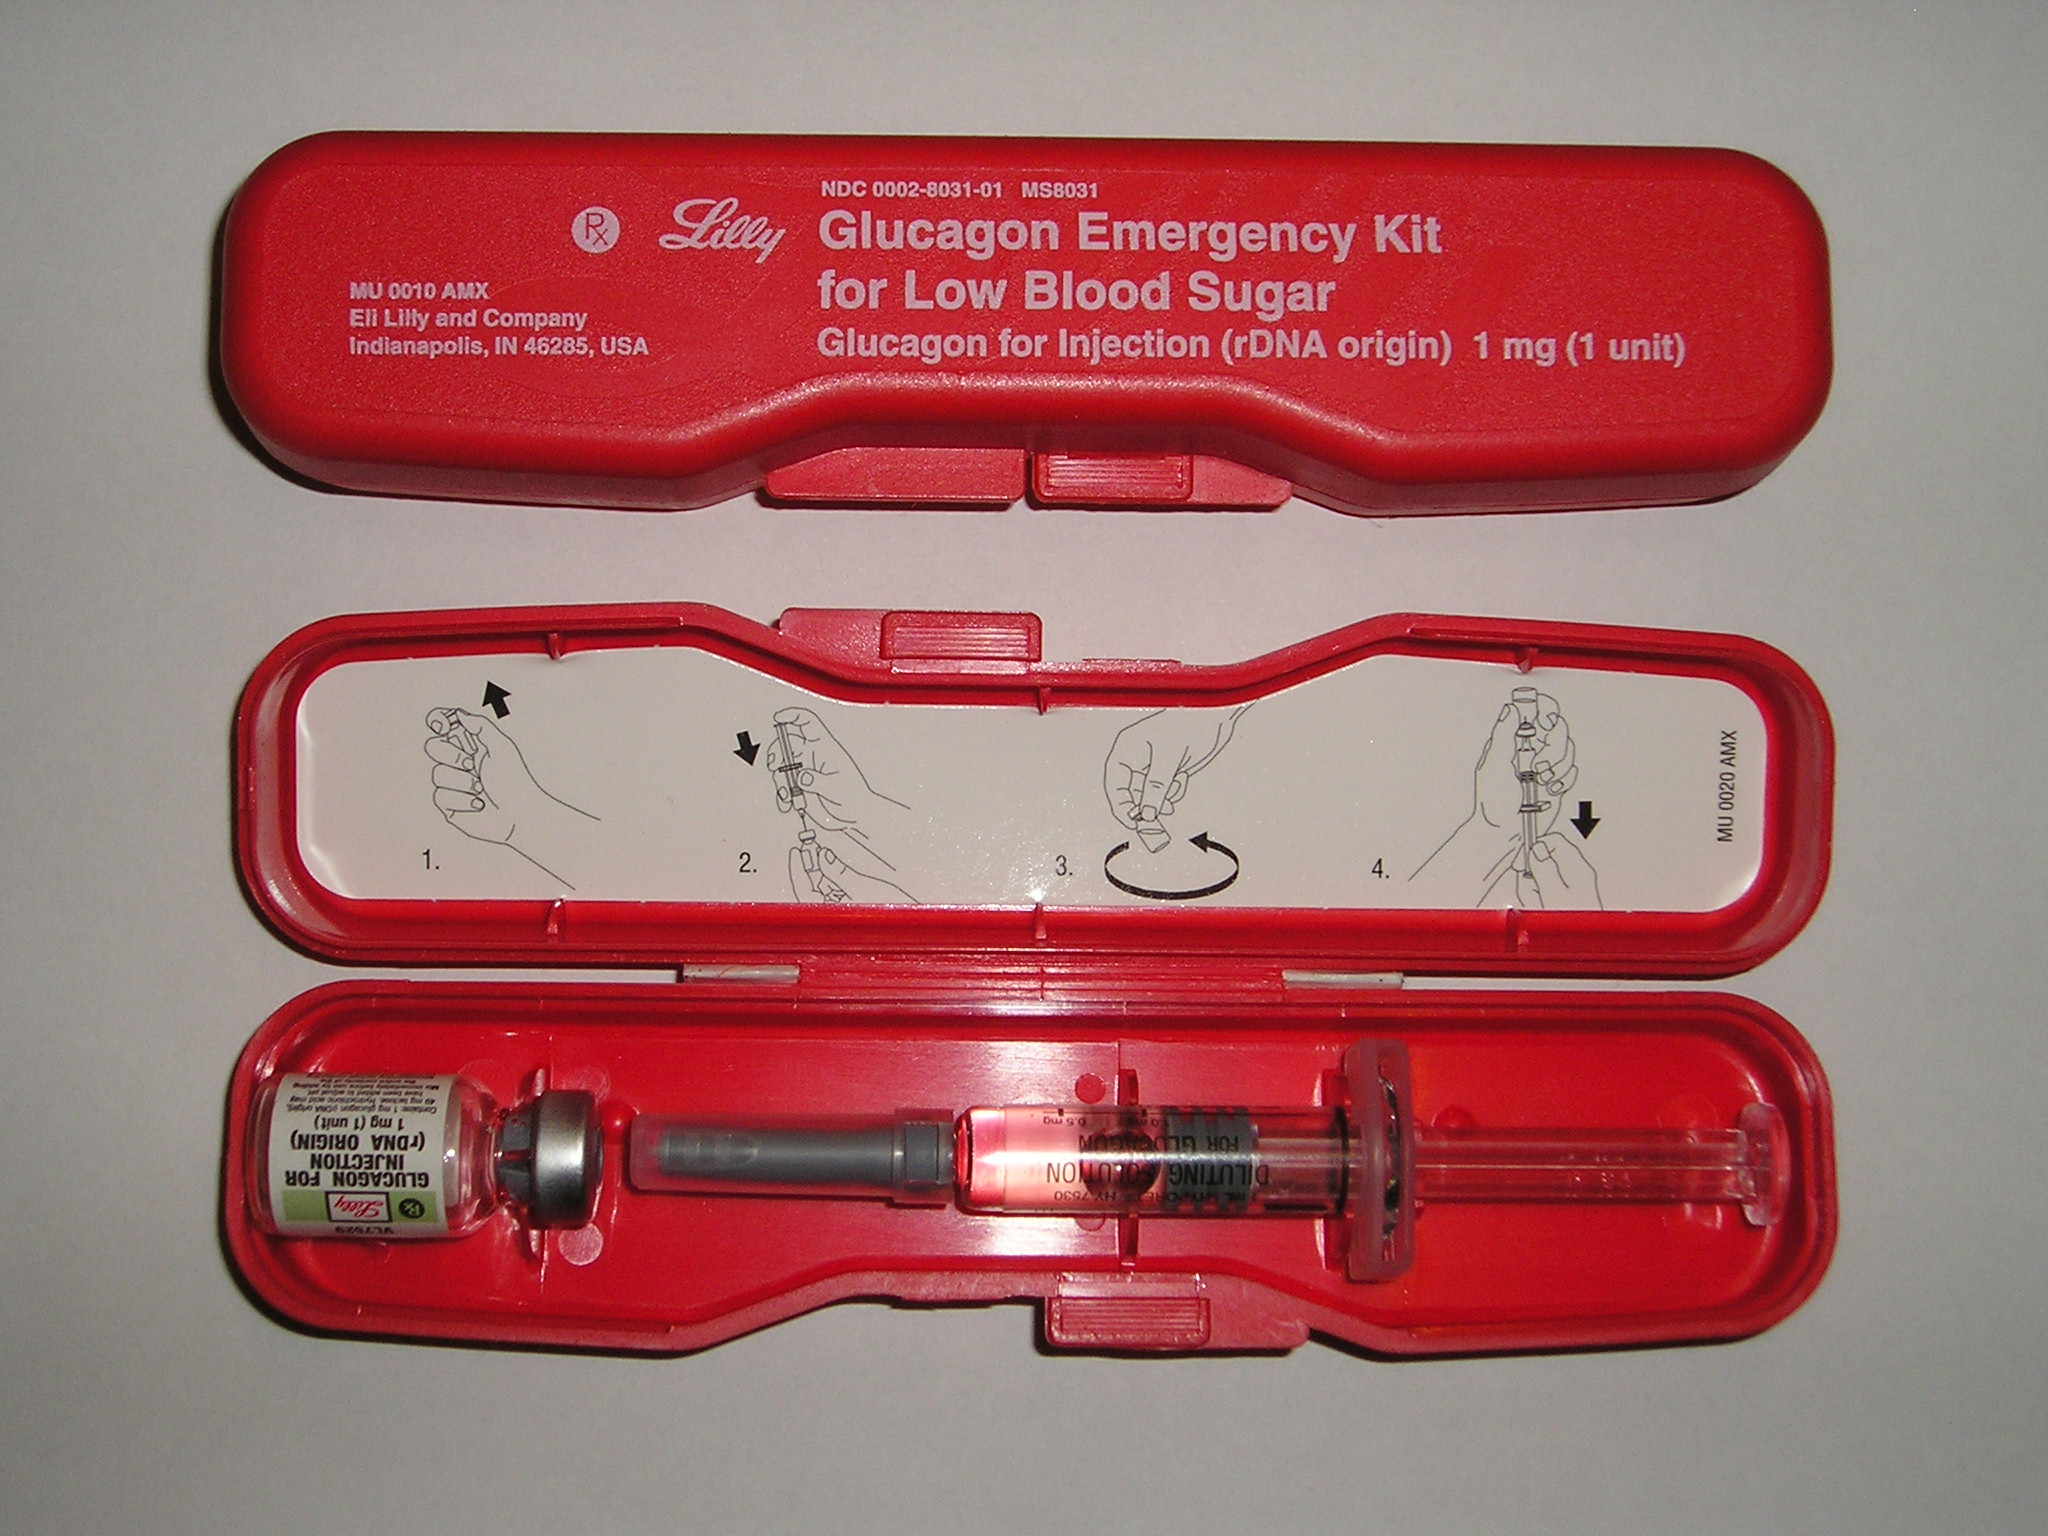 Photo showing emergency glucagon kit.